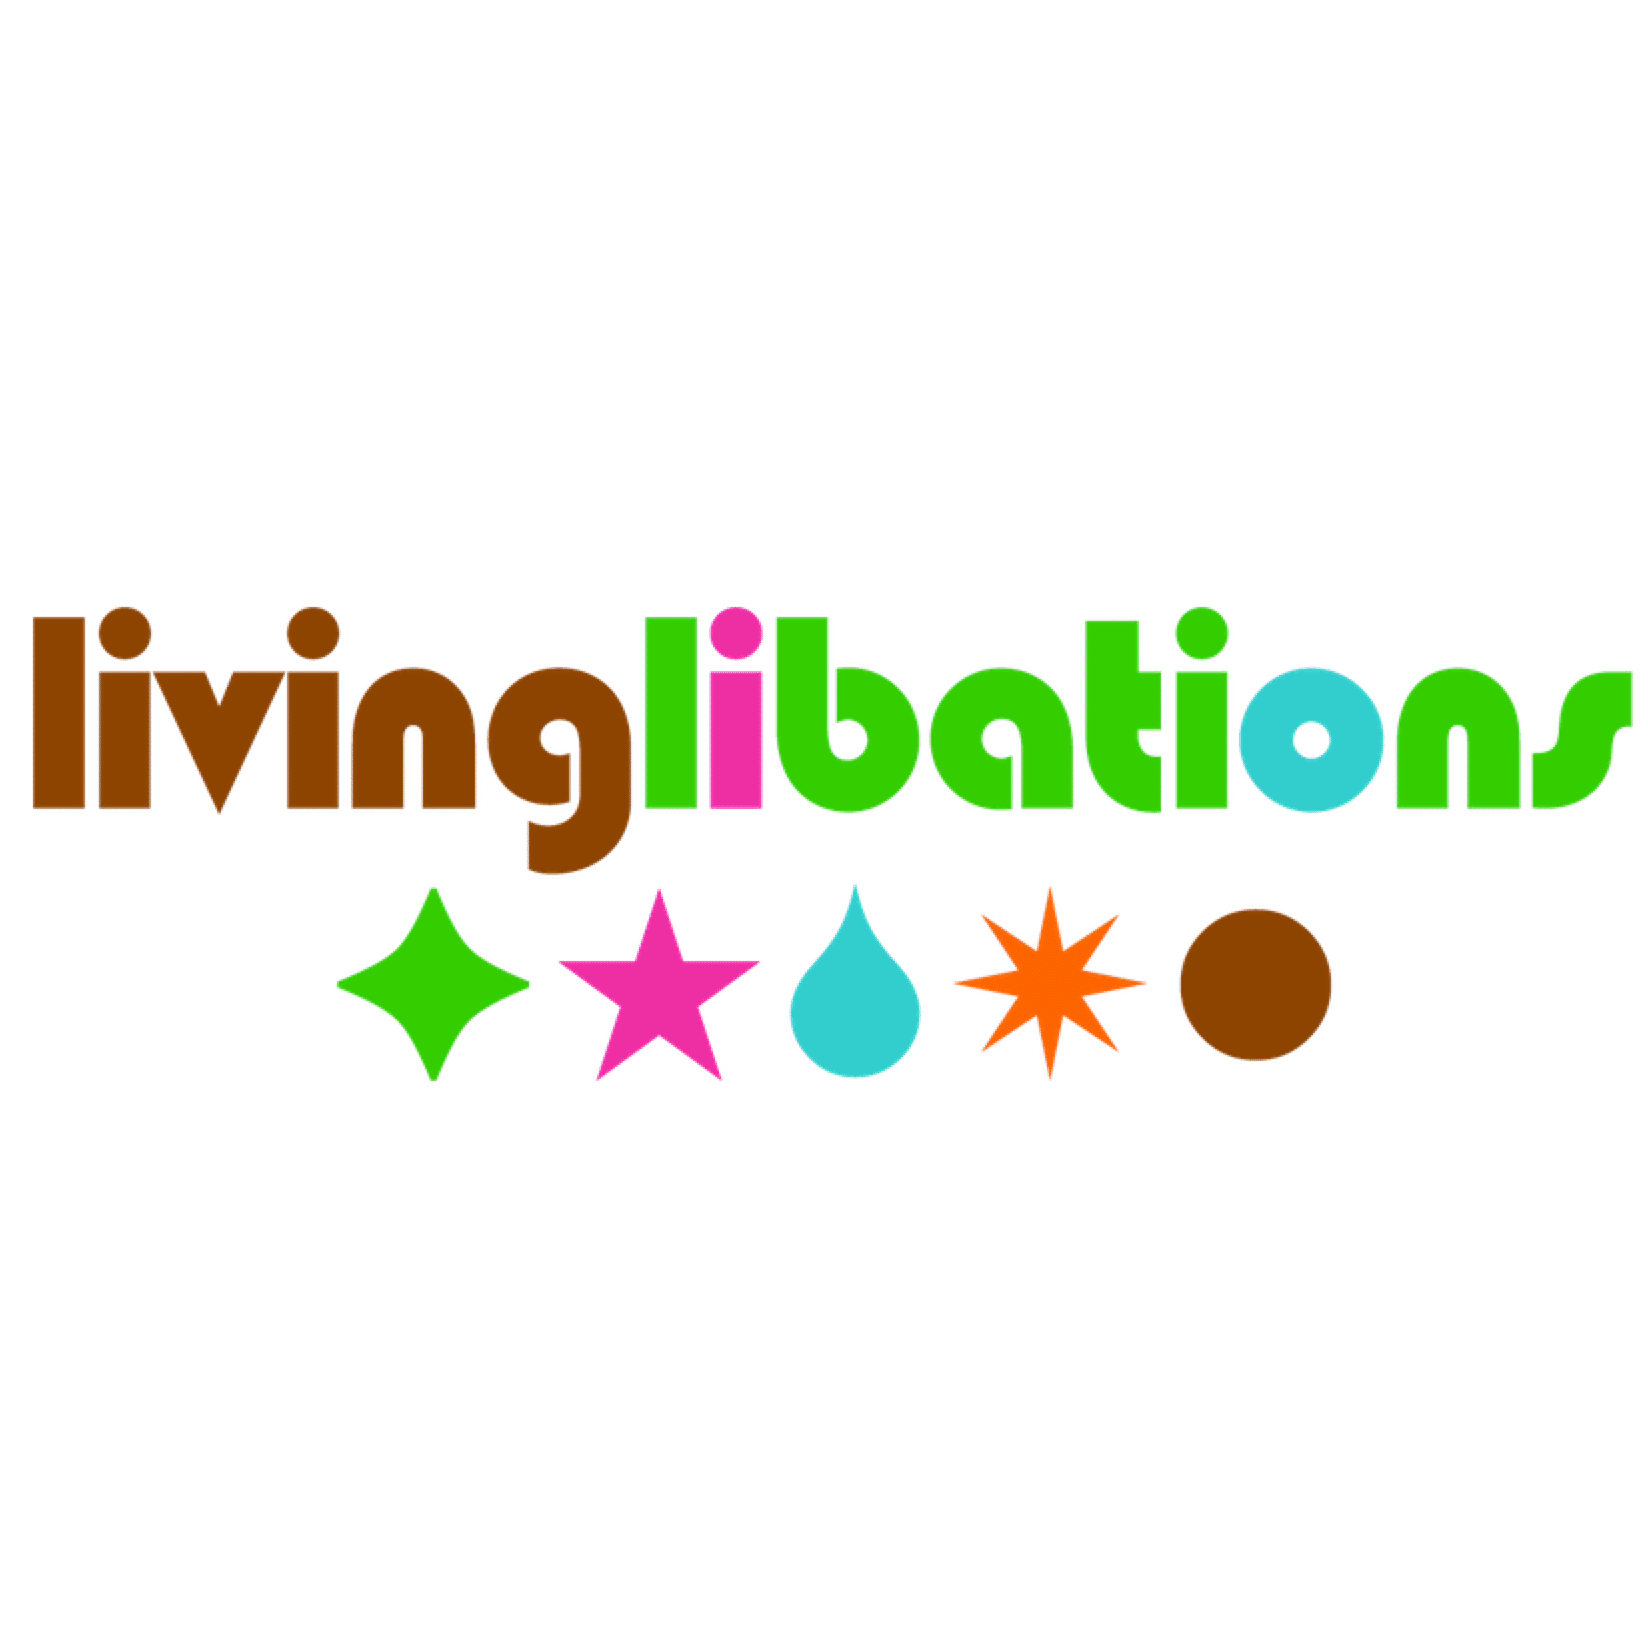 Living Libations Logo